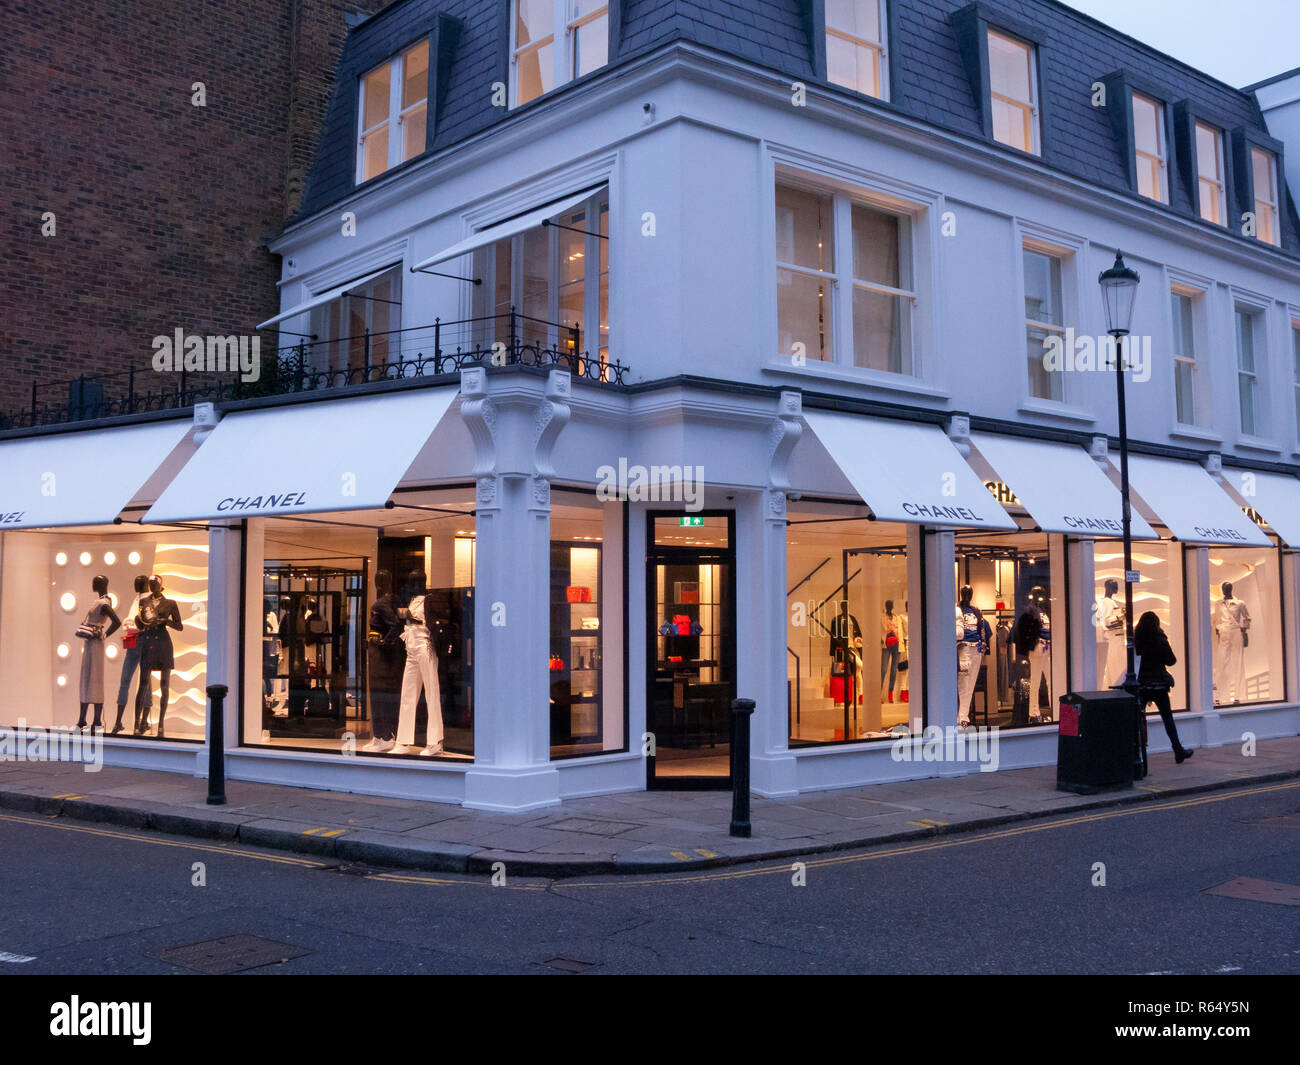 Chanel Store, Chelsea, London Stock Photo - Alamy